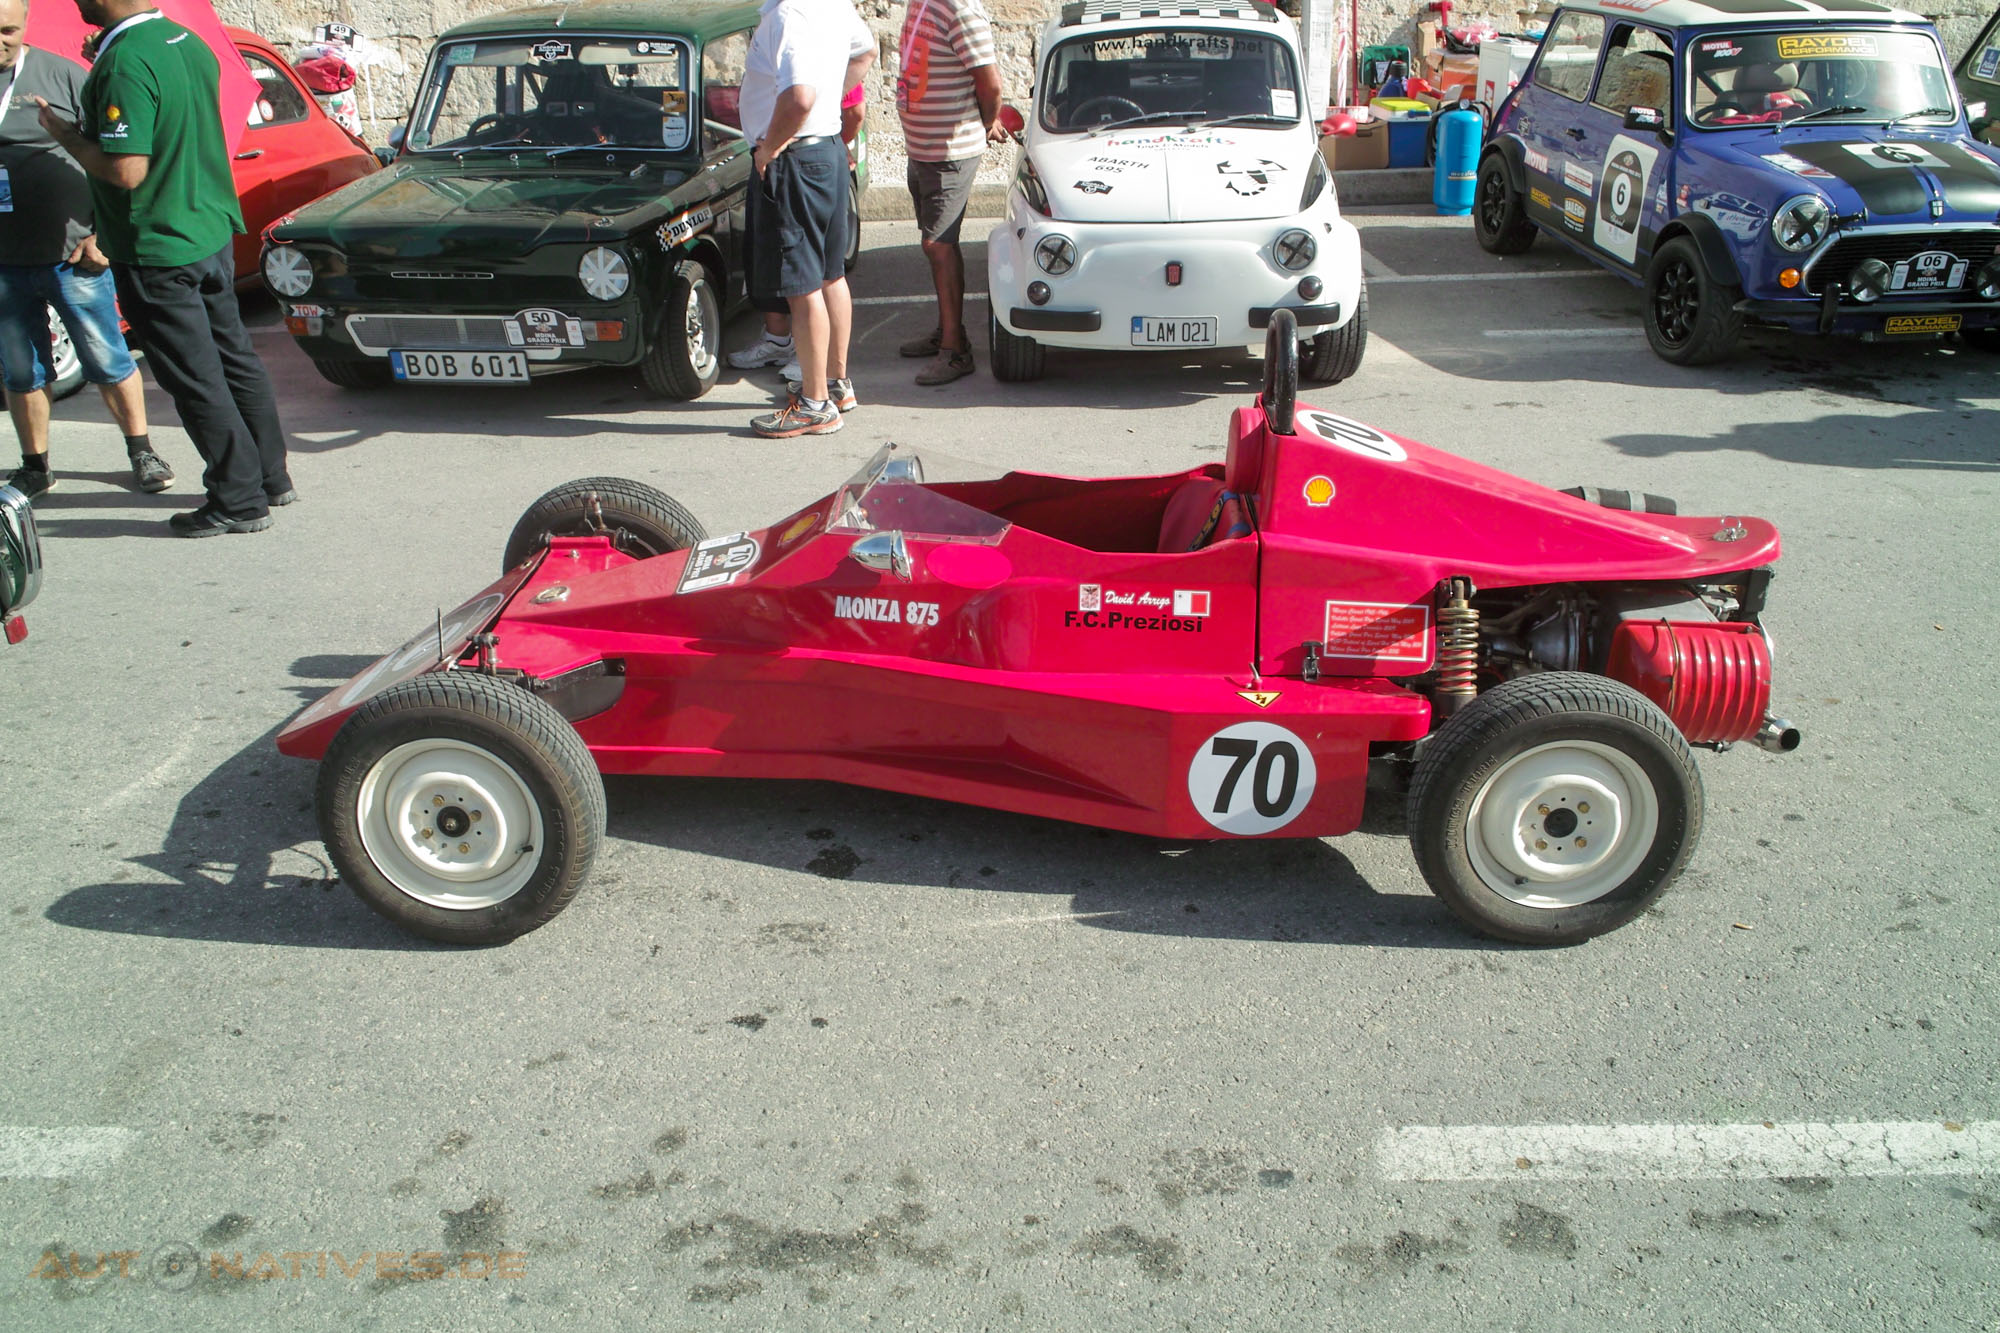 Formula Monza 875